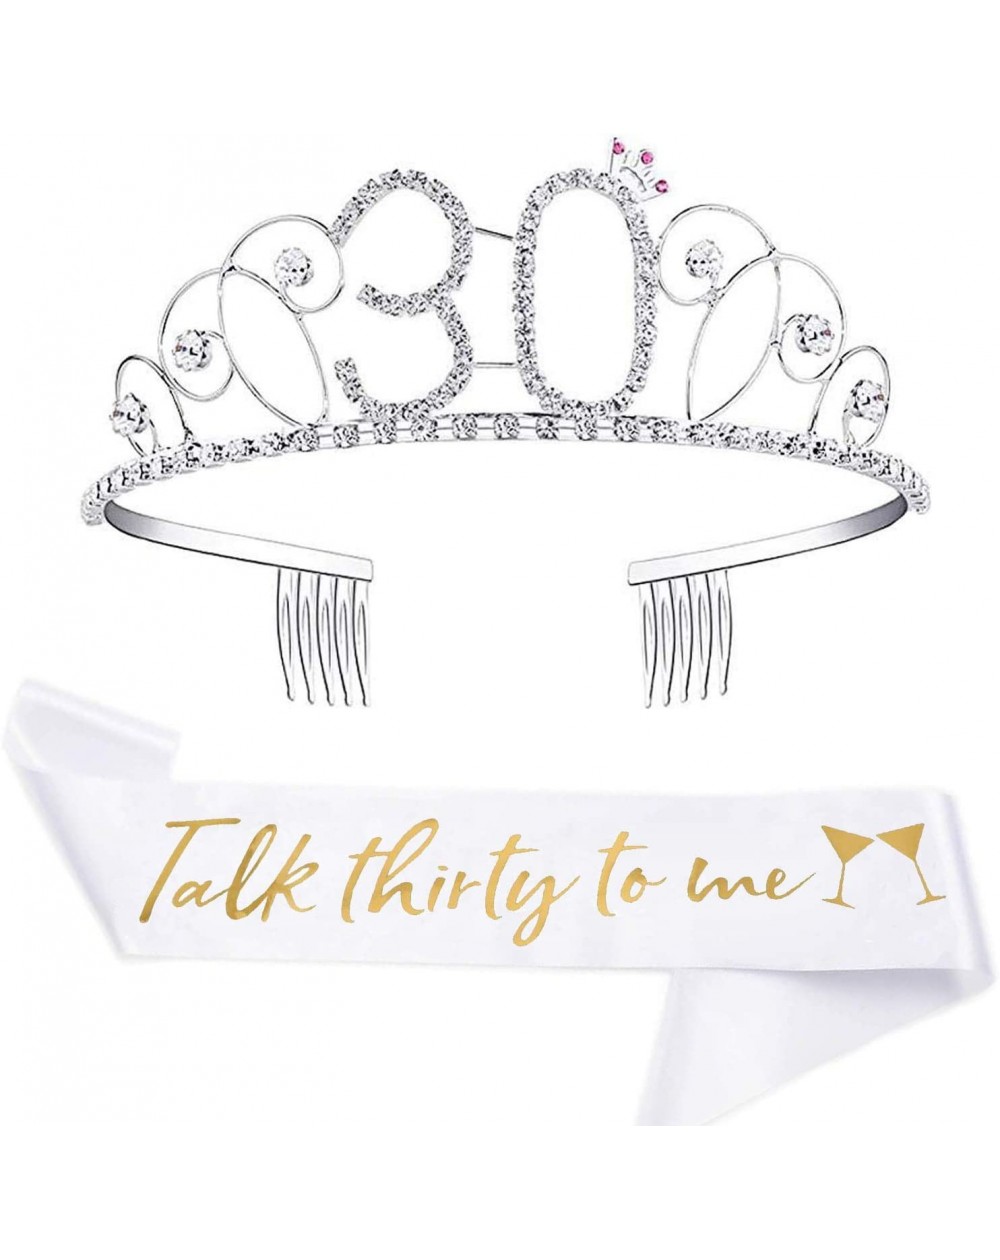 Favors 30th Birthday Sash and Tiara Kit- Talk Thirty to Me Birthday Sash with Crown- Birthday Gifts for Women 30th Birthday P...